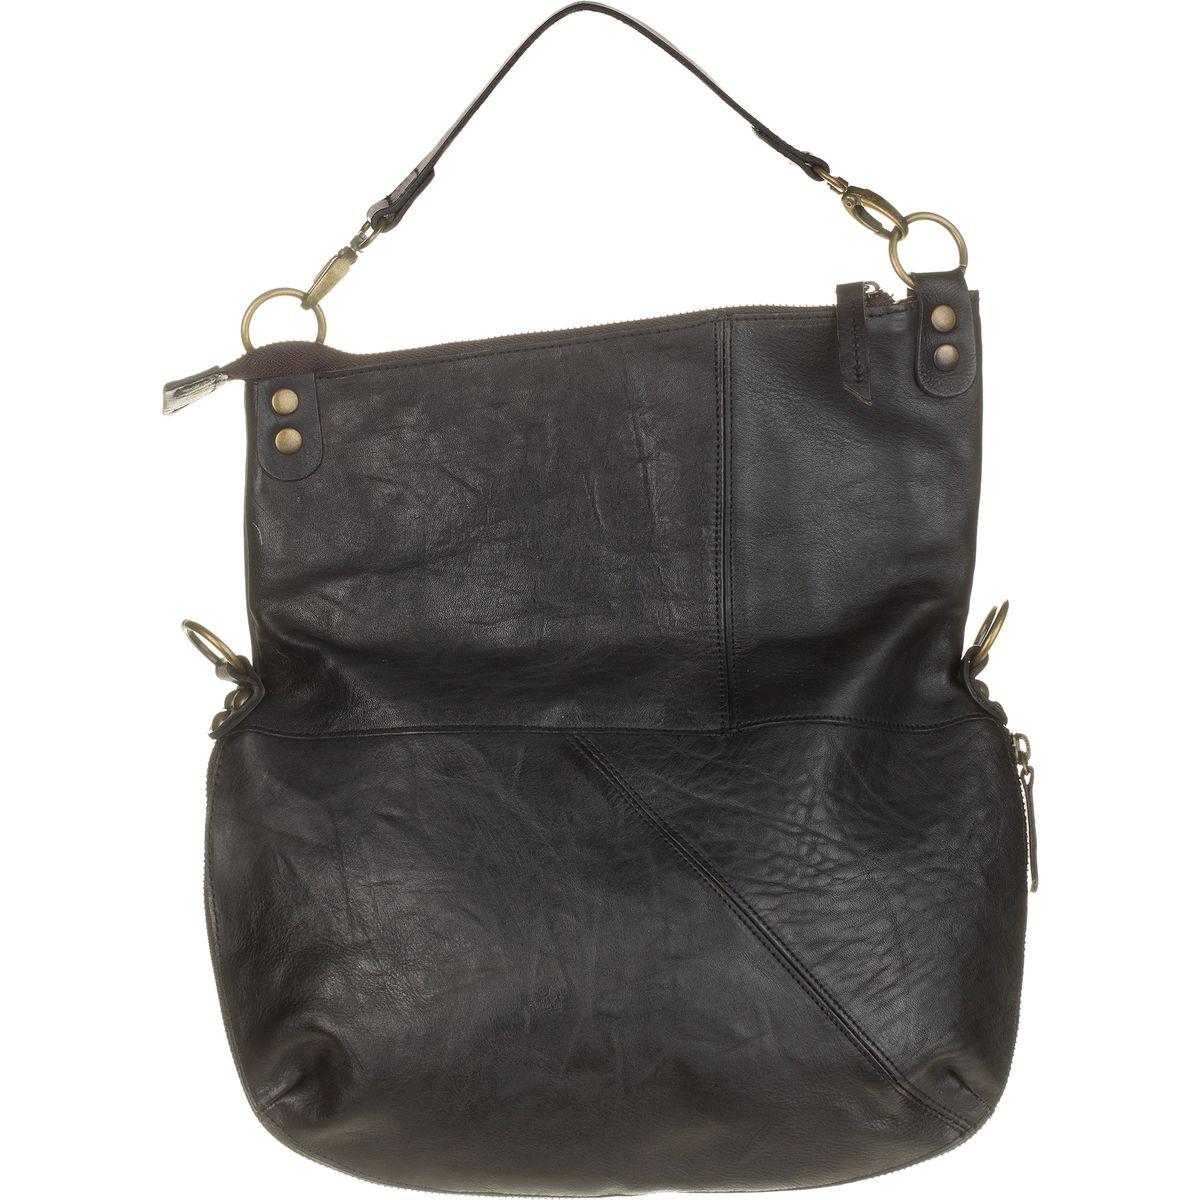 Bed Stu Leather Tahiti Foldover Crossbody Bag in Black - Lyst